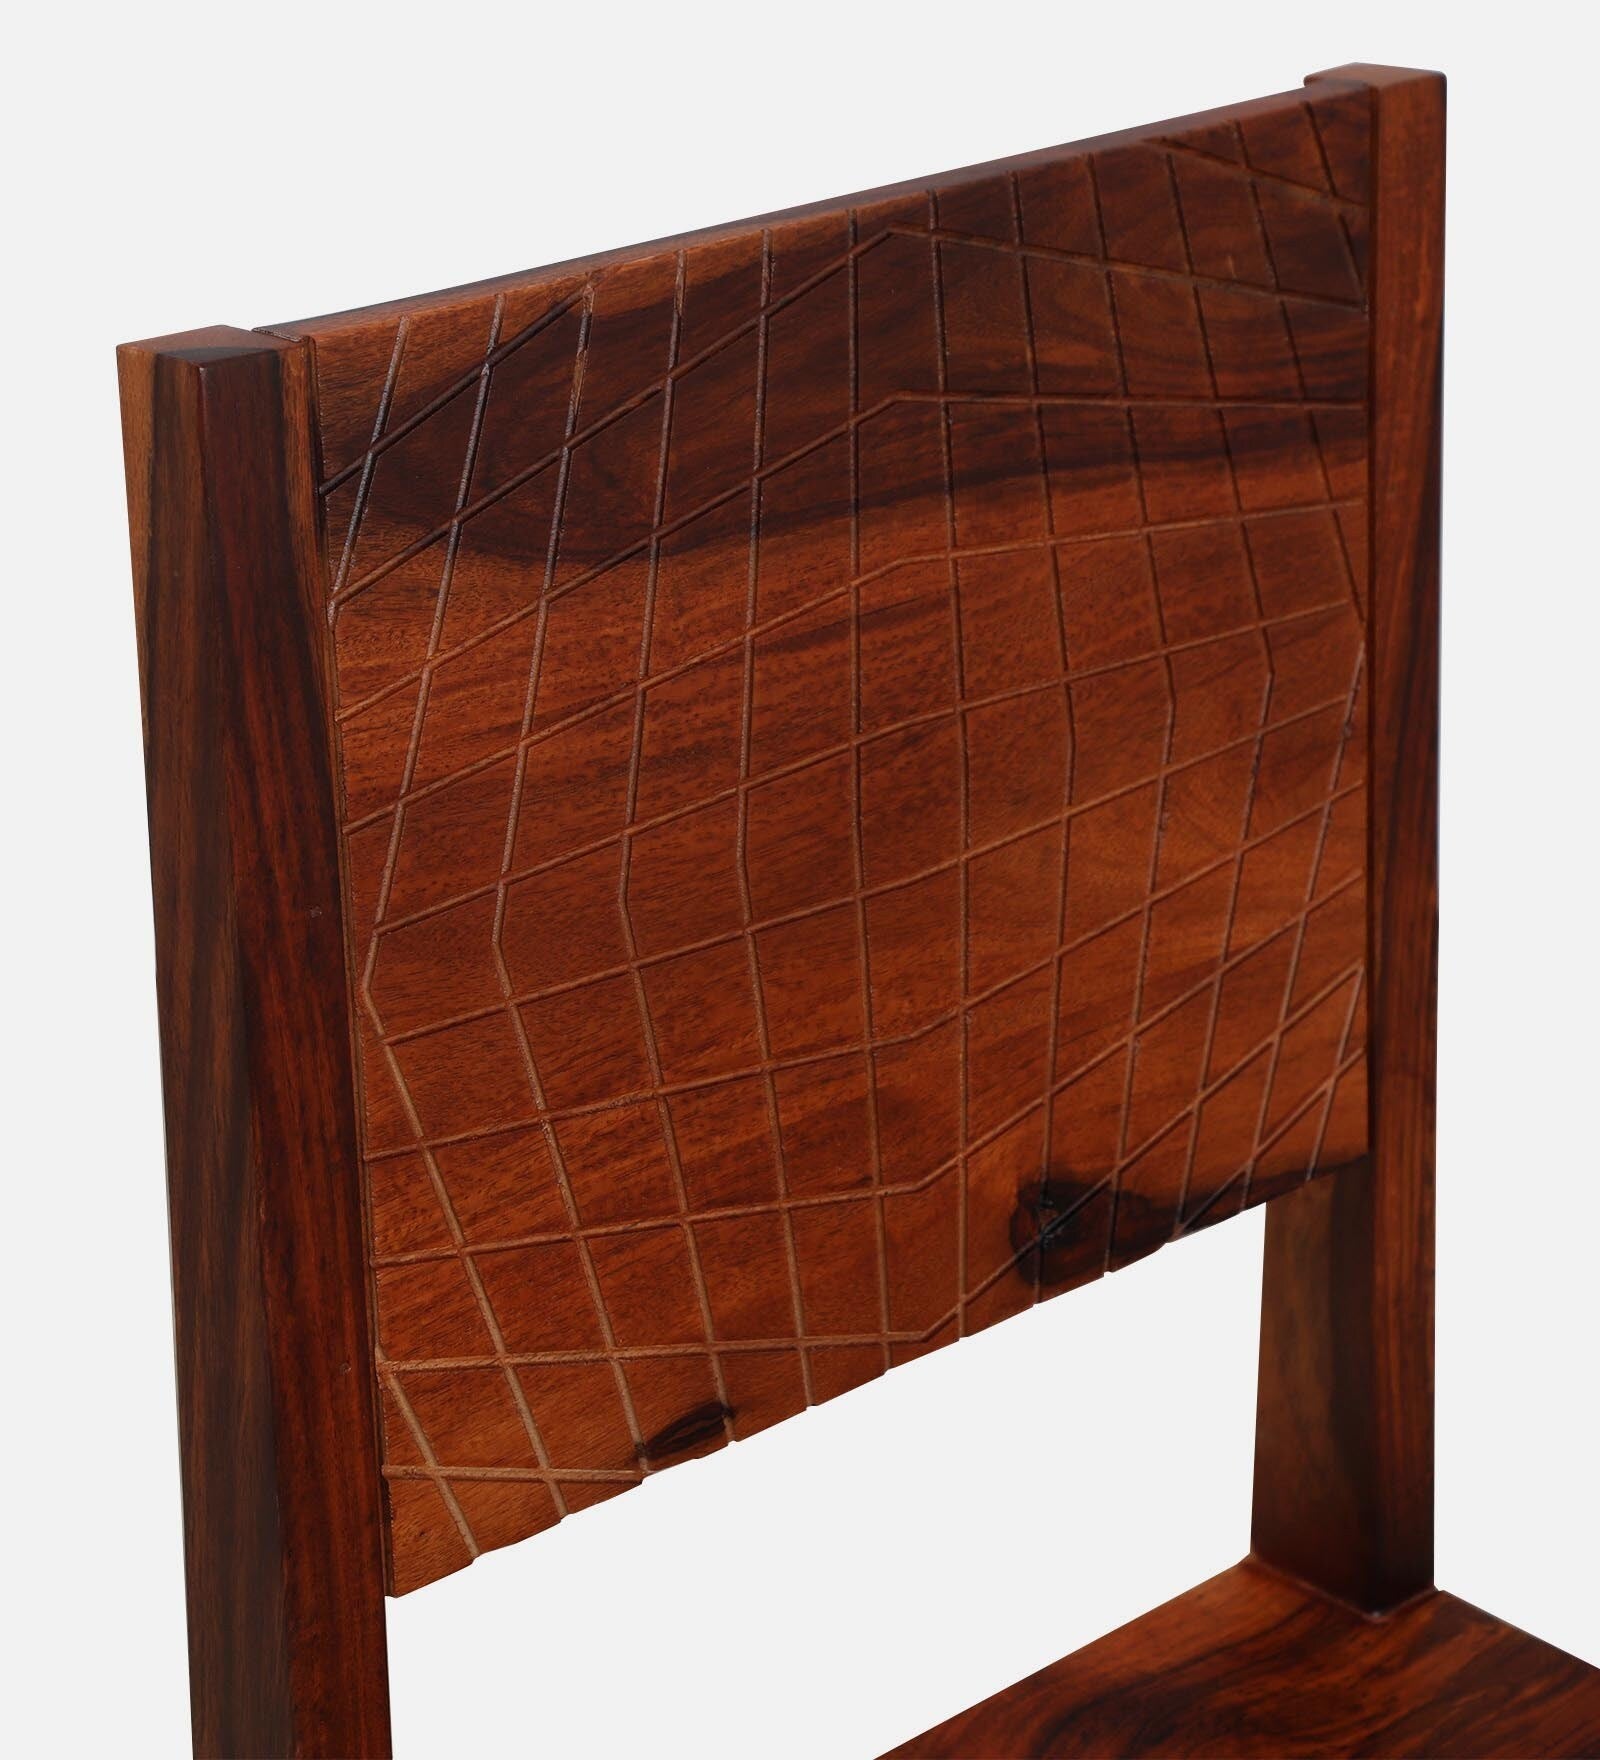 Harmonia Solid Wood Dining Chairs (Set Of 2) In Honey Oak Finish By Rajwada - Rajwada Furnish